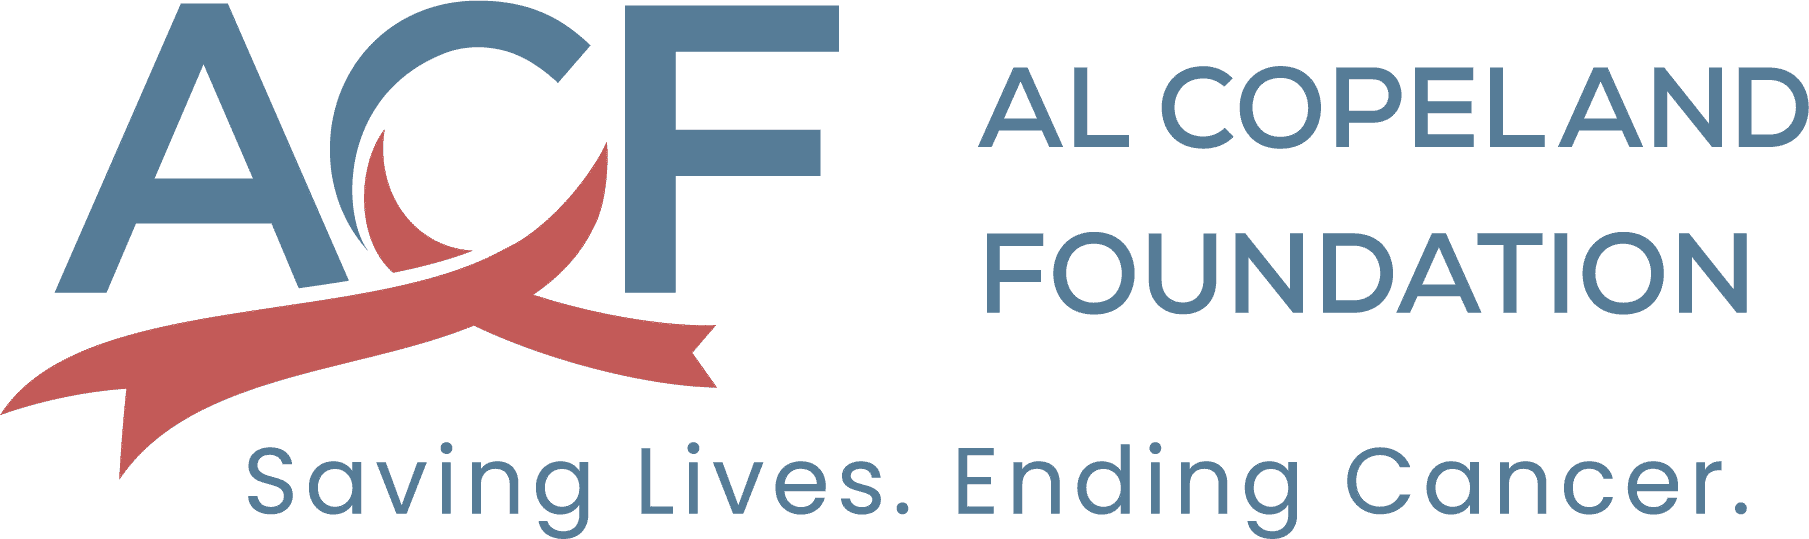 Al Copeland Foundation logo and tagline